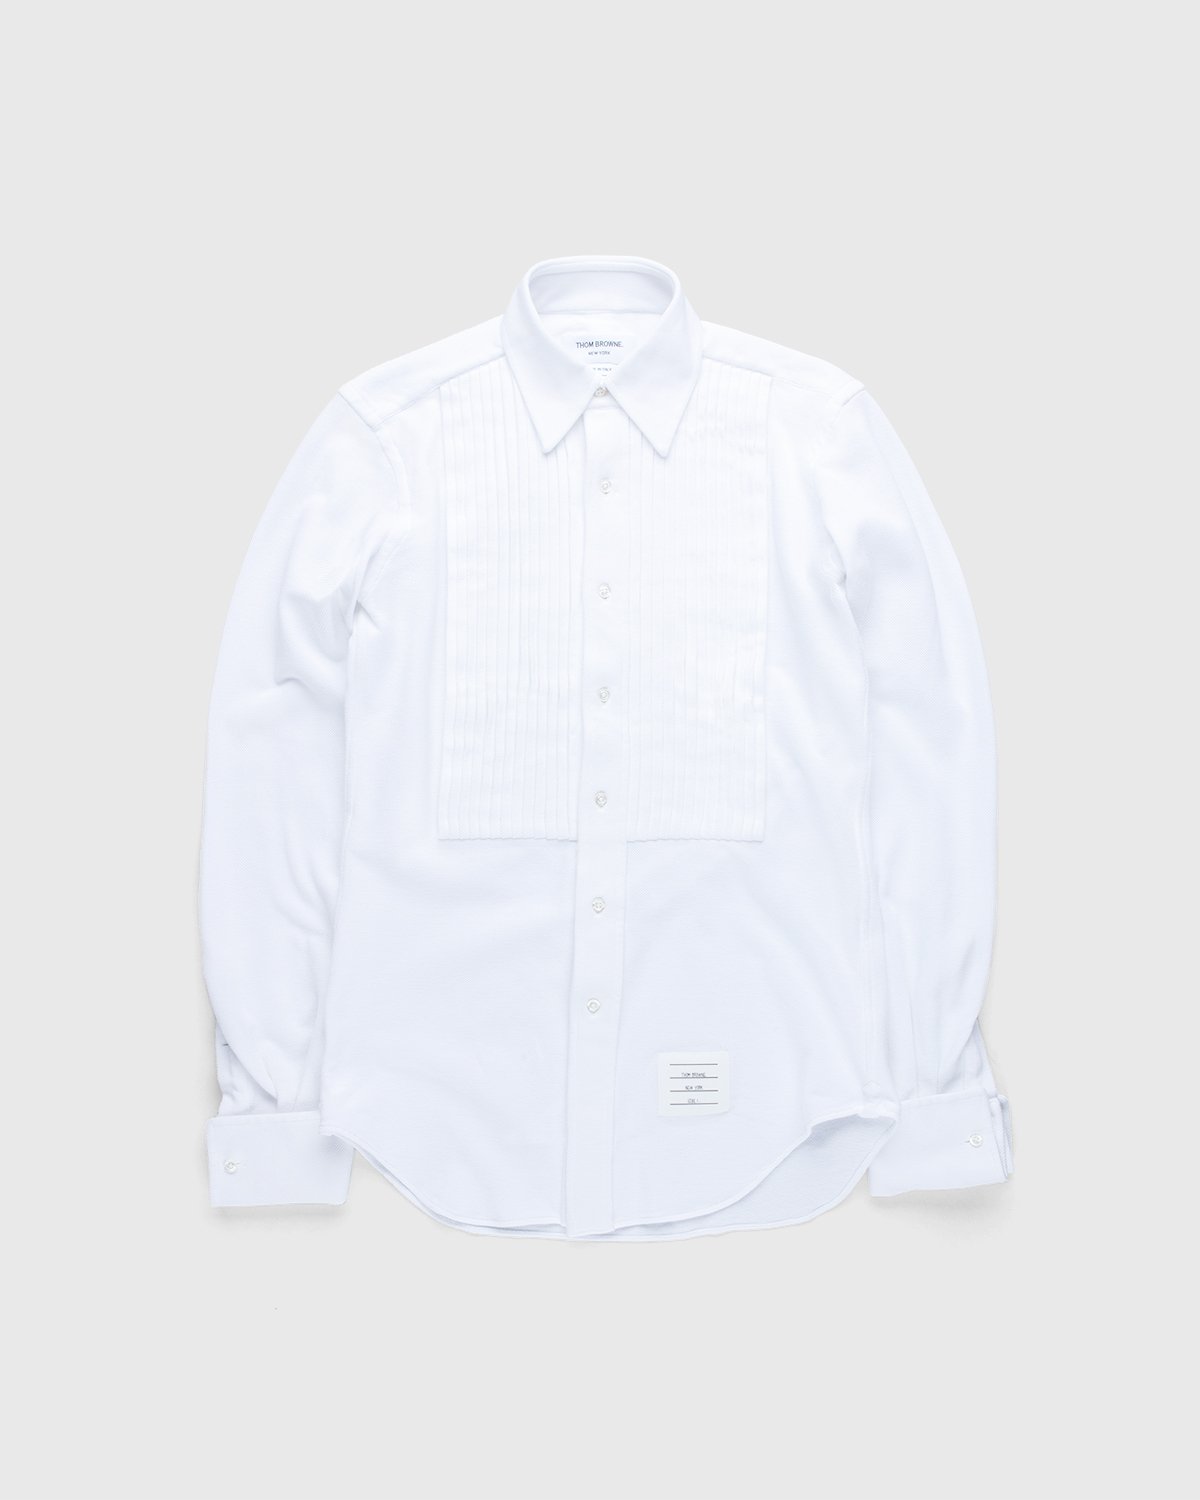 Thom Browne x Highsnobiety - Men's Pique Ruffled-Bib Tux Shirt White - Clothing - White - Image 1